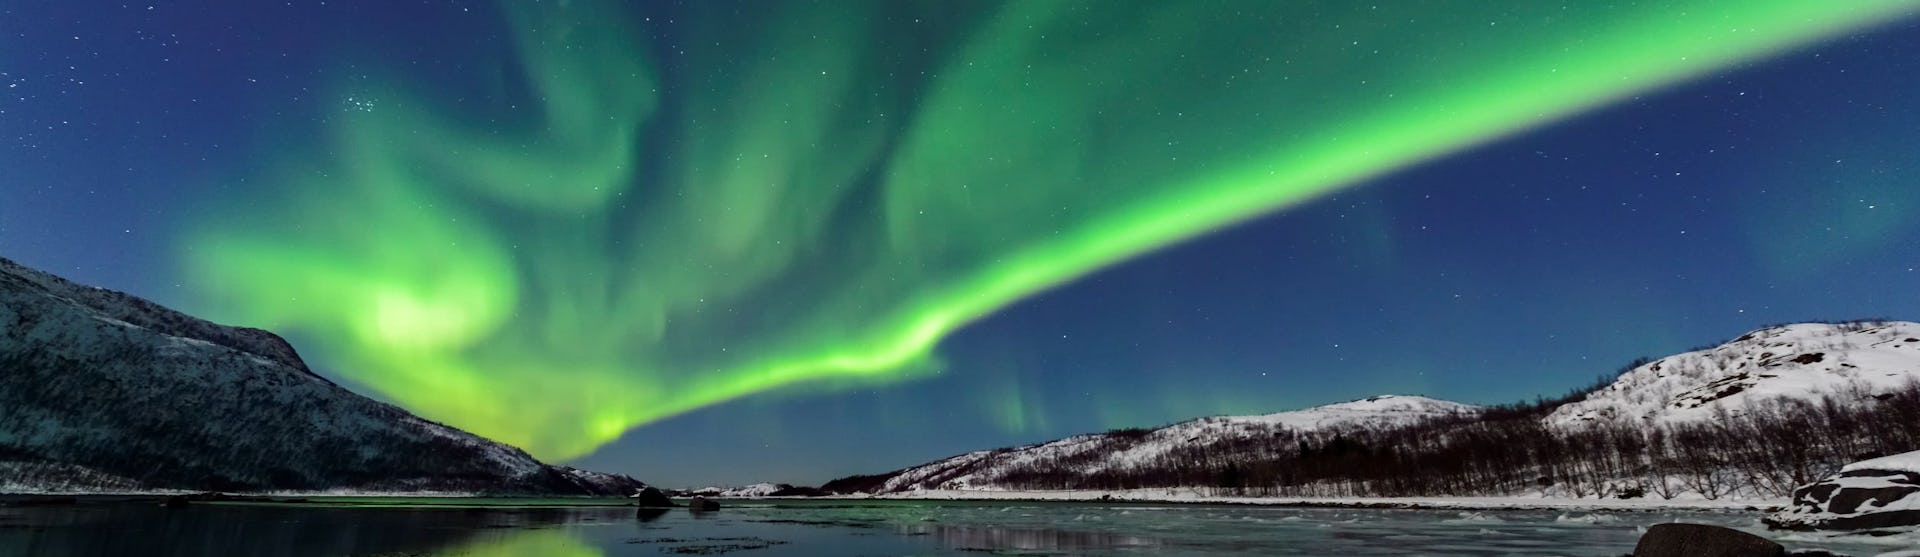 Norway-Northern-Lights-Northern-Europe